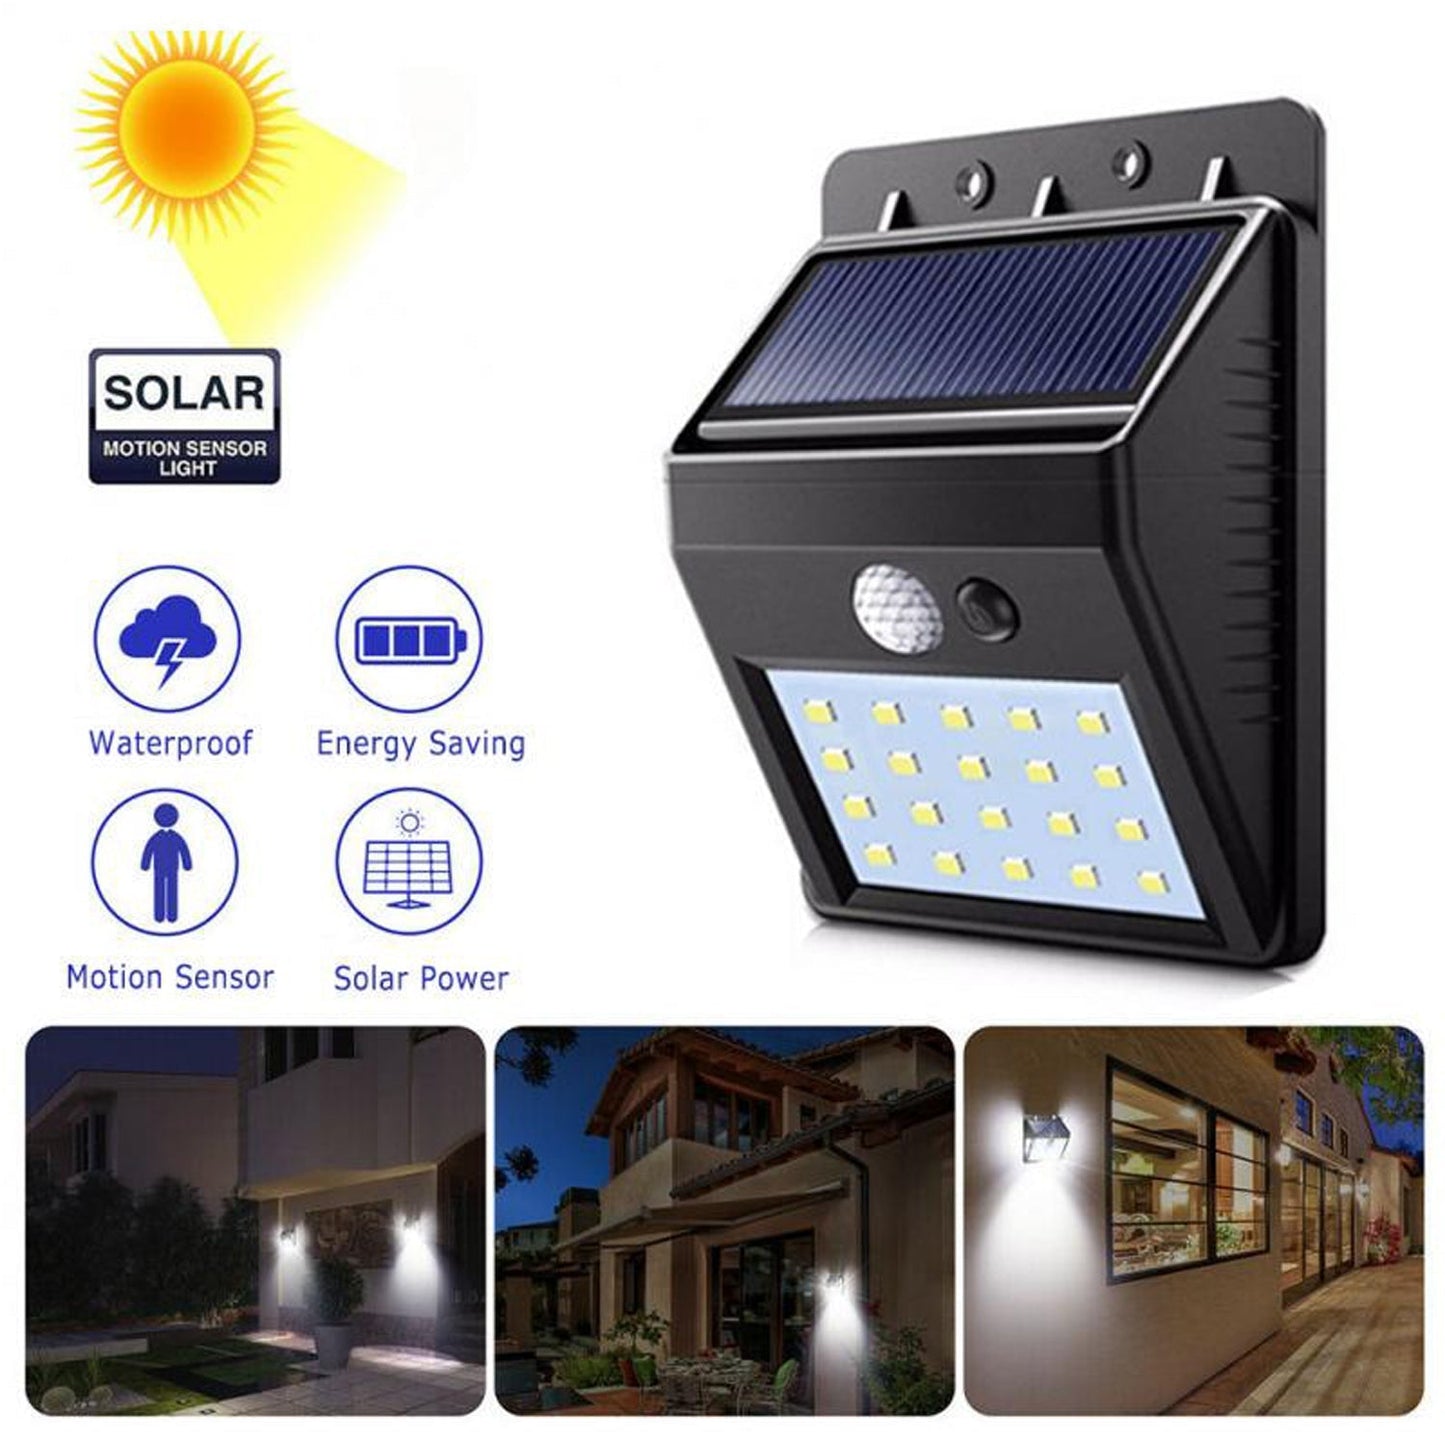 6609 Yellow Solar Wireless Security Motion Sensor LED Night Light for Home Outdoor/Garden Wall. DeoDap